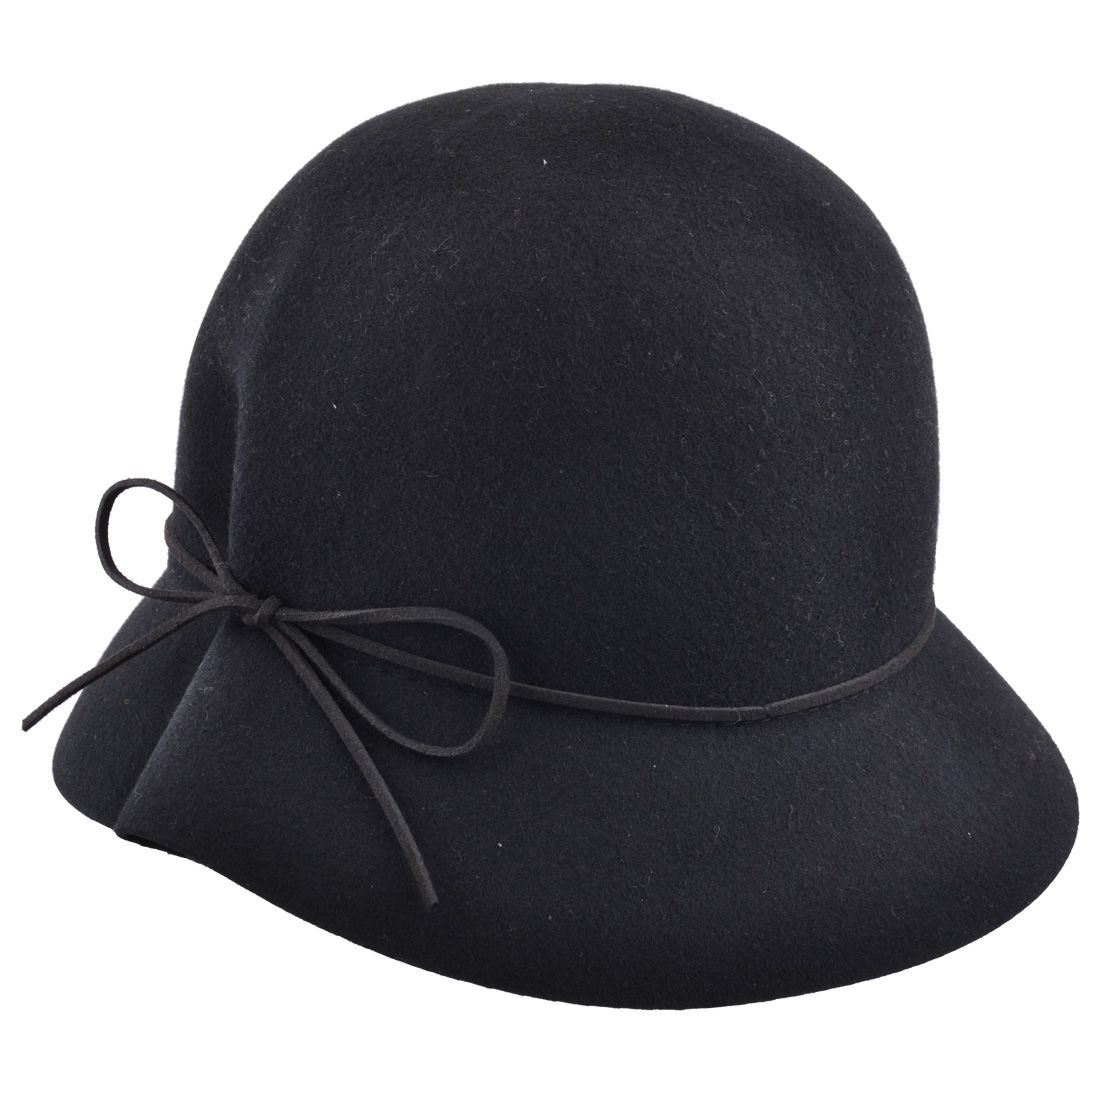 Wool Felt Cloche Hat With Thin Bow